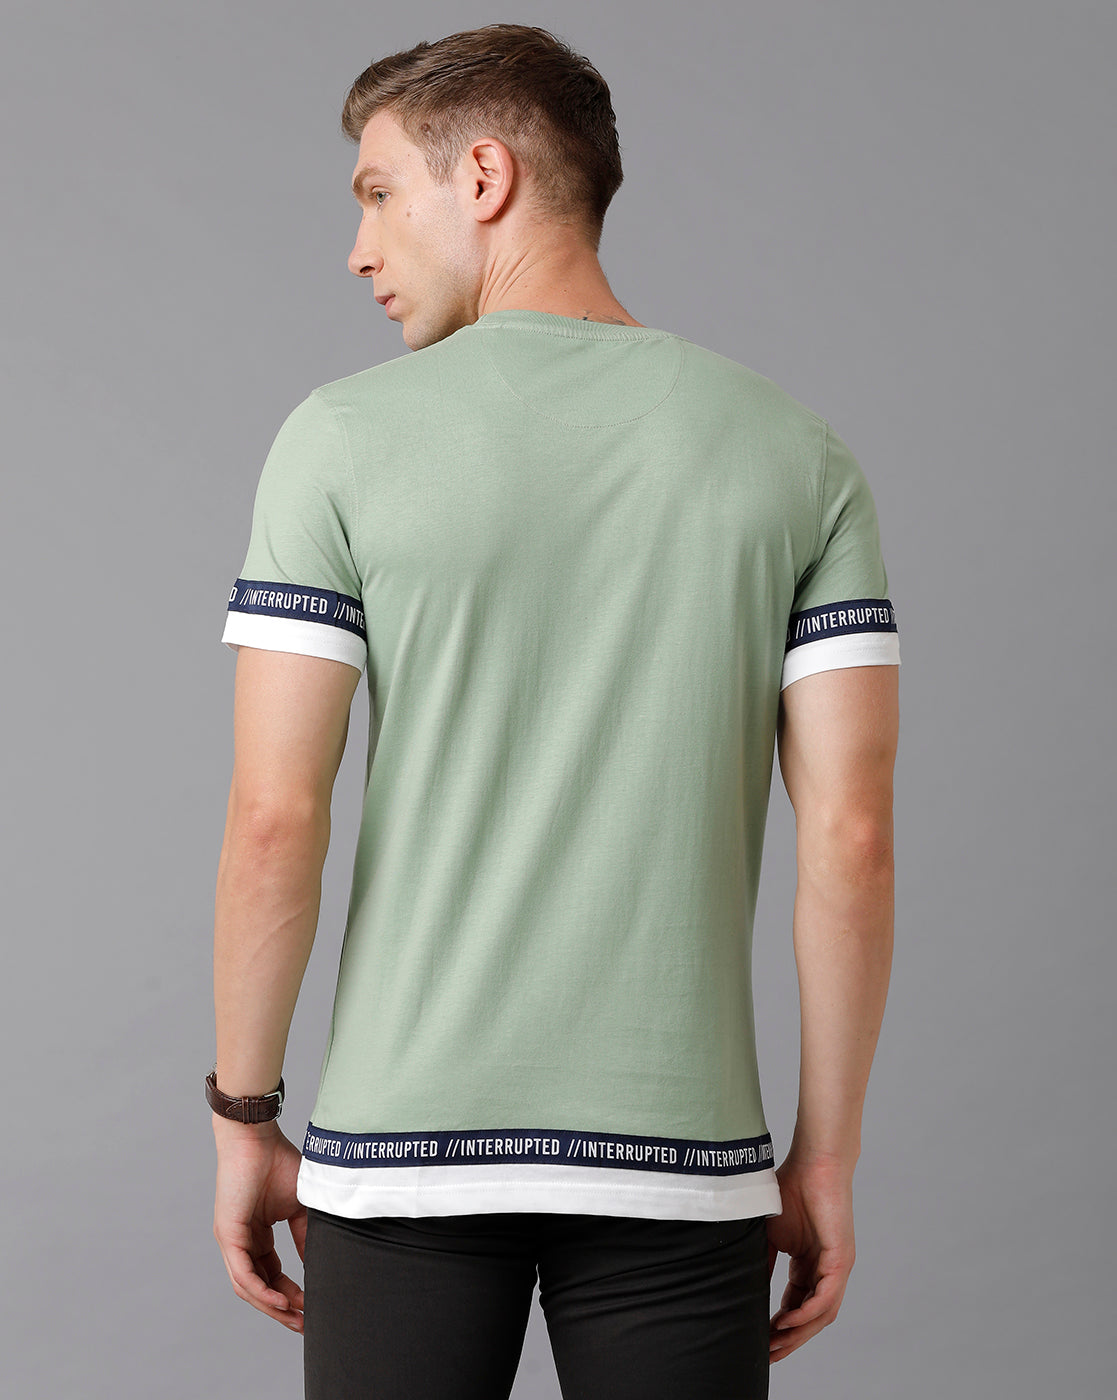 CP BRO Men's Cotton Printed Slim Fit Green T-Shirt | Brcn - 487 B